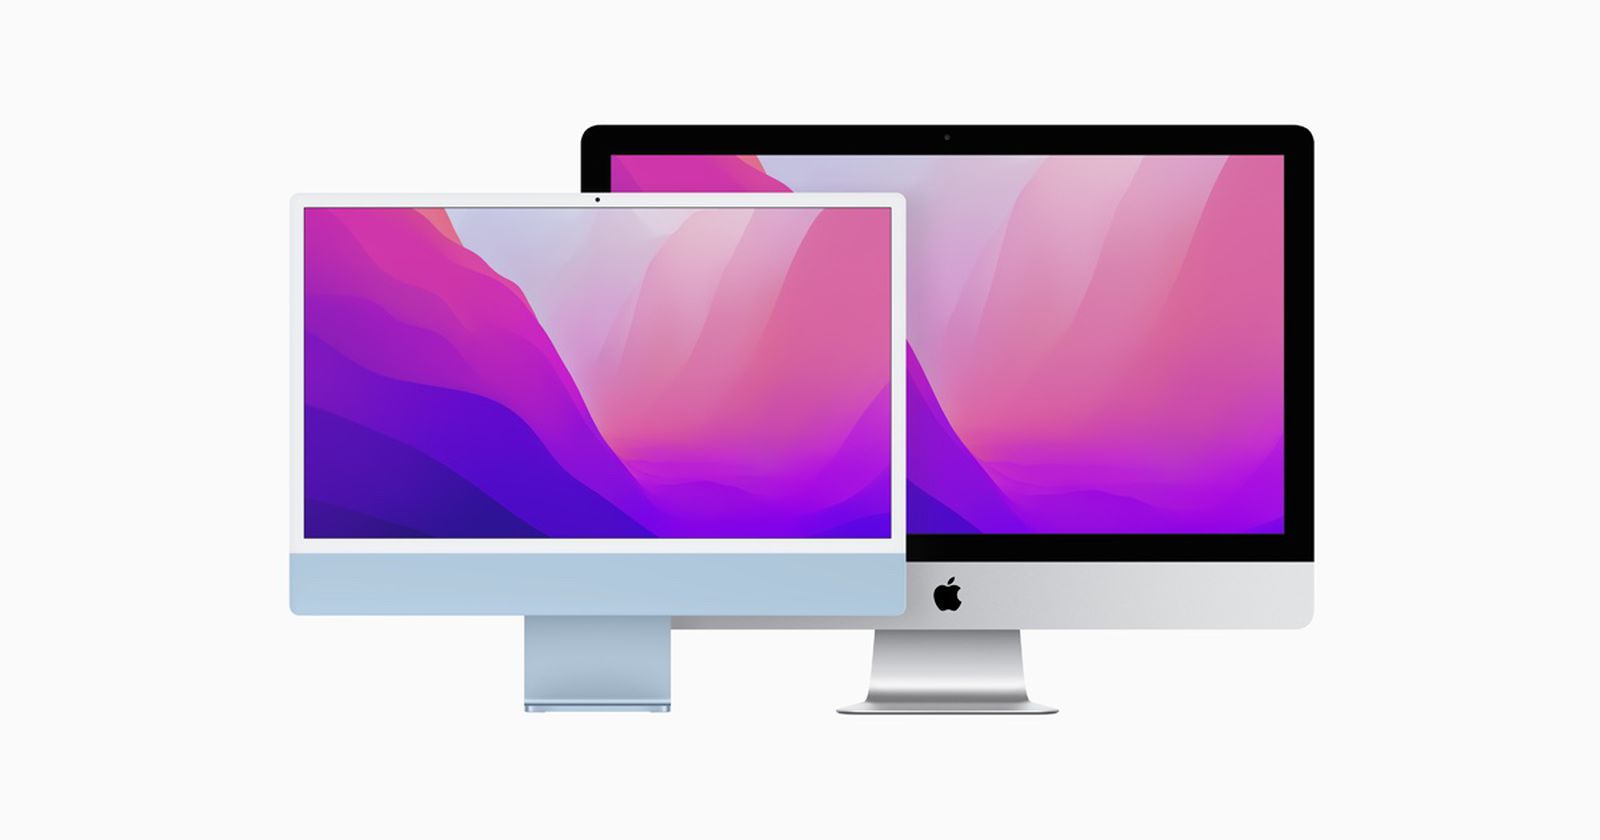 To νέο iMac 27 ιντσών όπως φαίνεται δεν θα διαθέτει Mini-LED οθόνη αλλά LCD